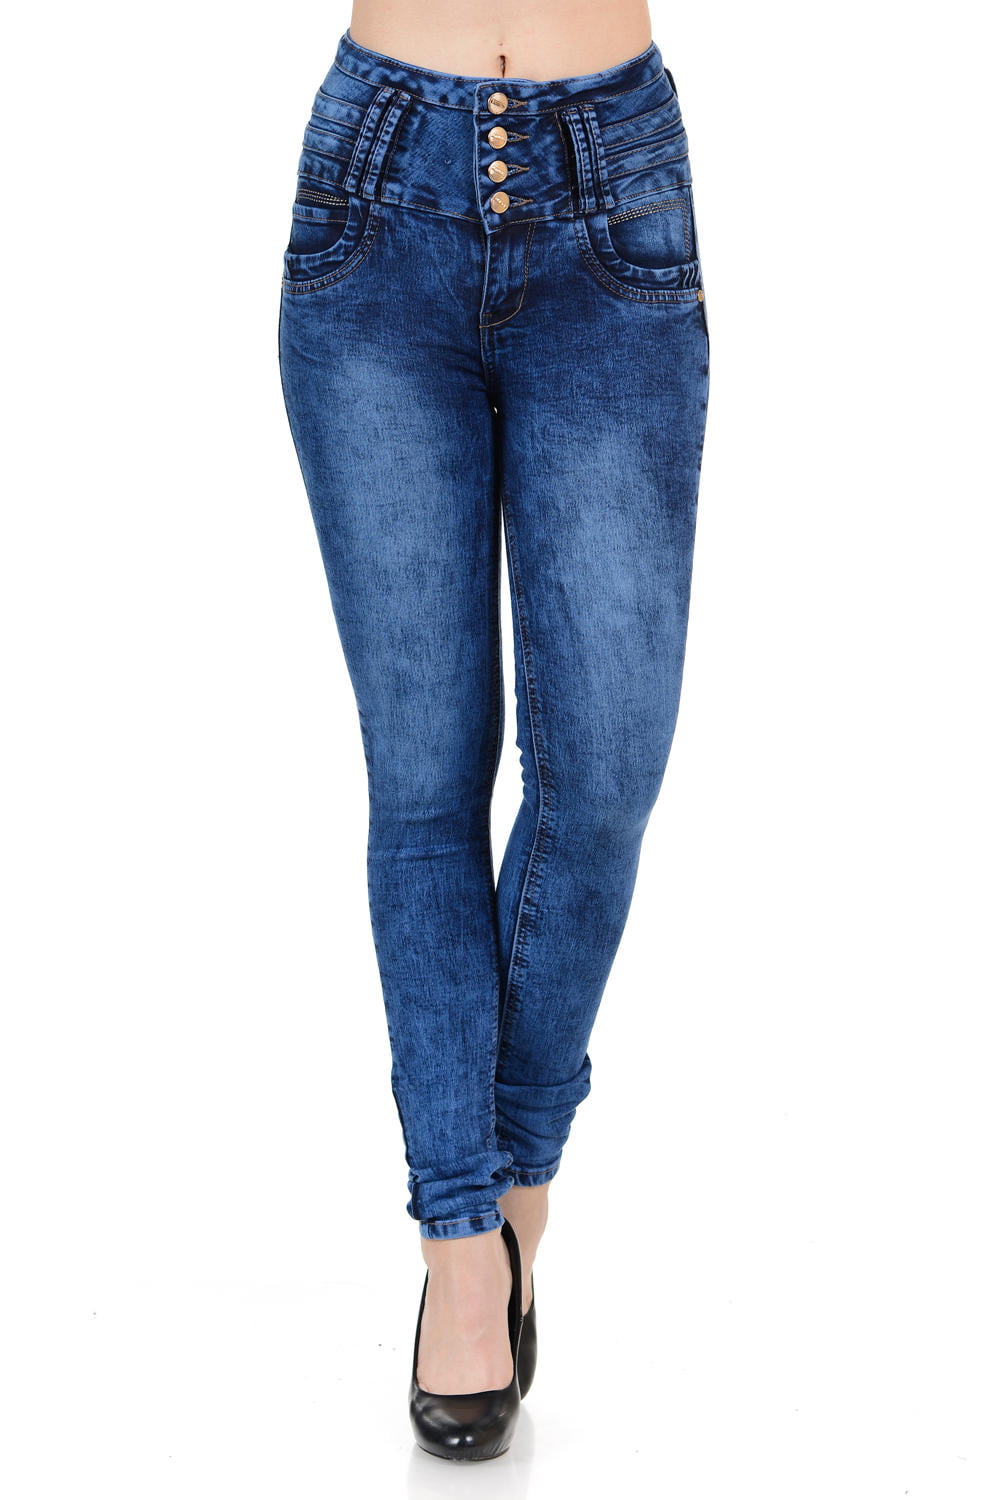 vibrant women's jeans